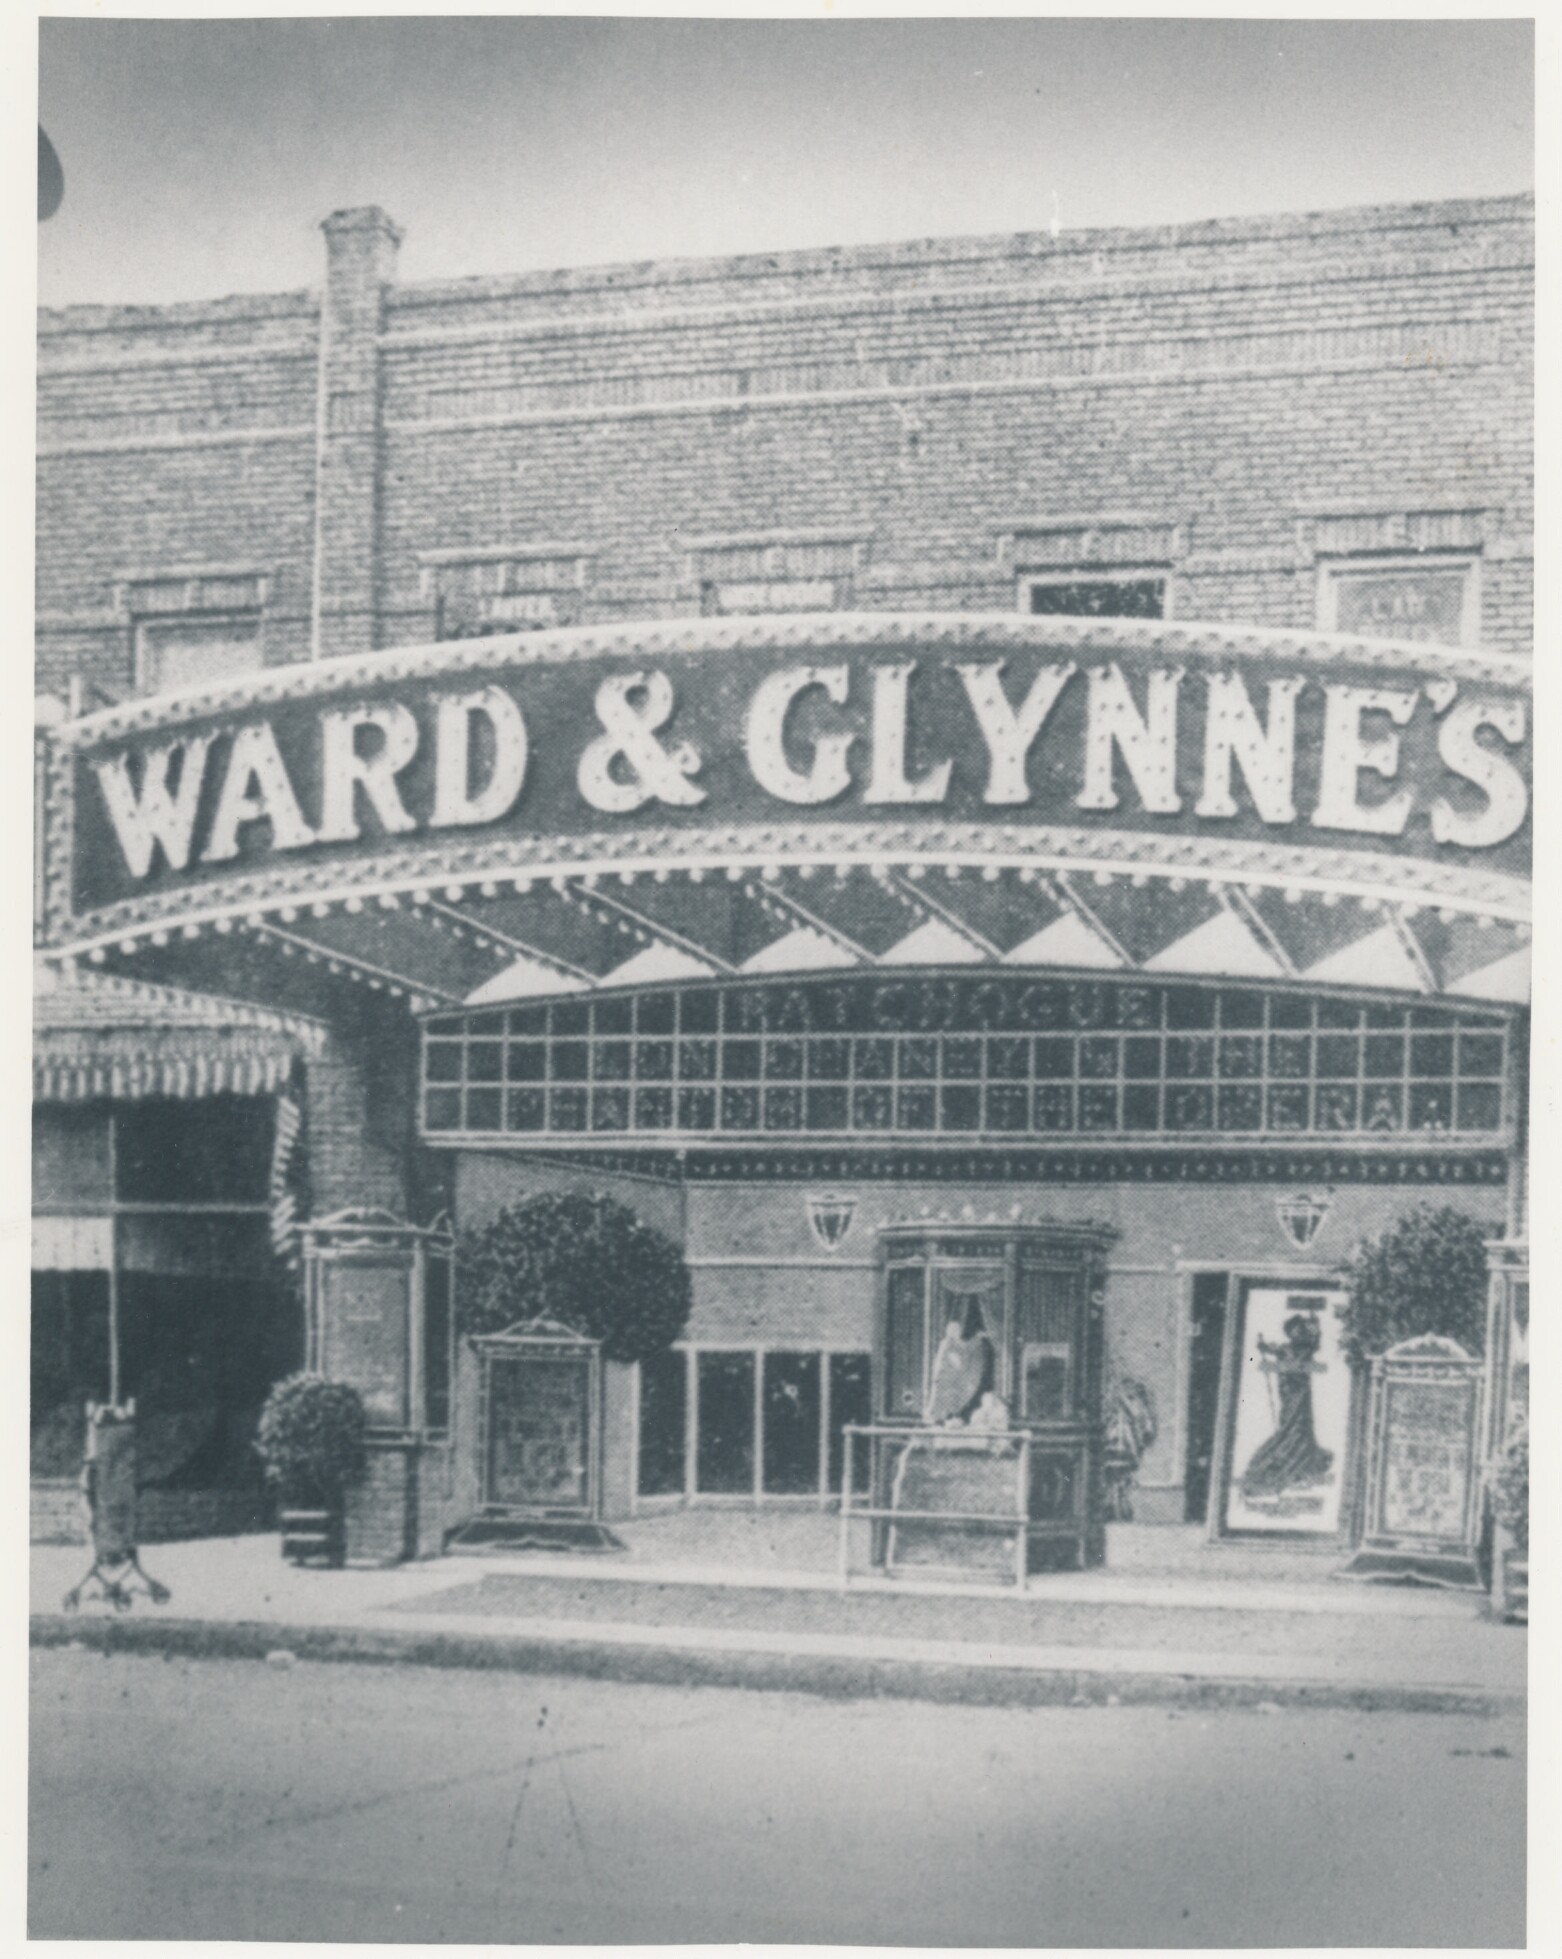 Ward & Glynne's